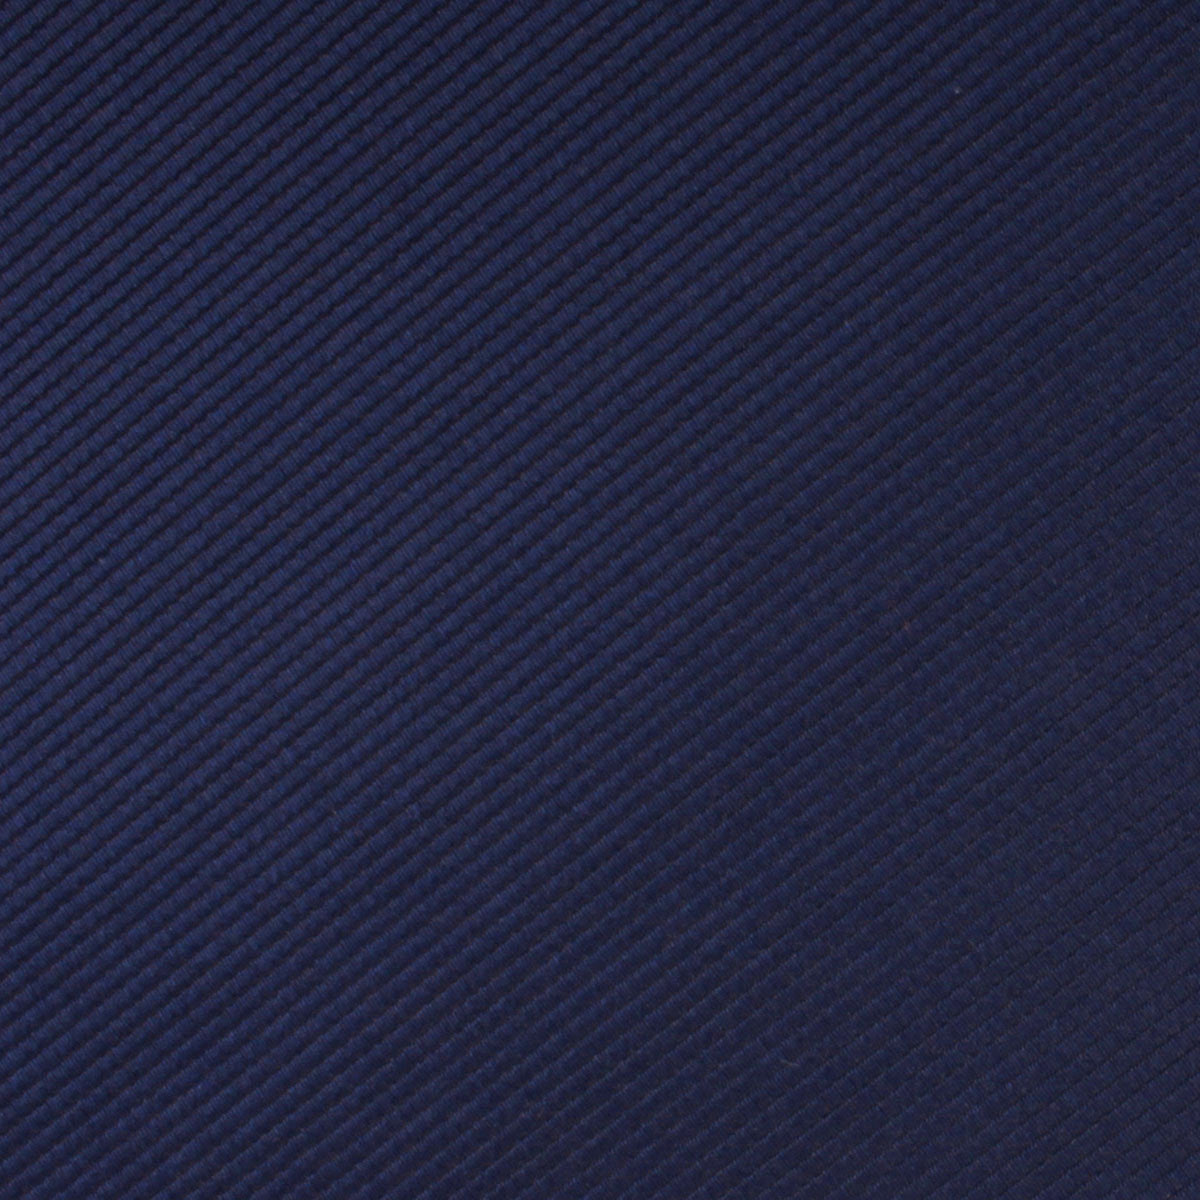 Marine Midnight Blue Twill Pocket Square Fabric